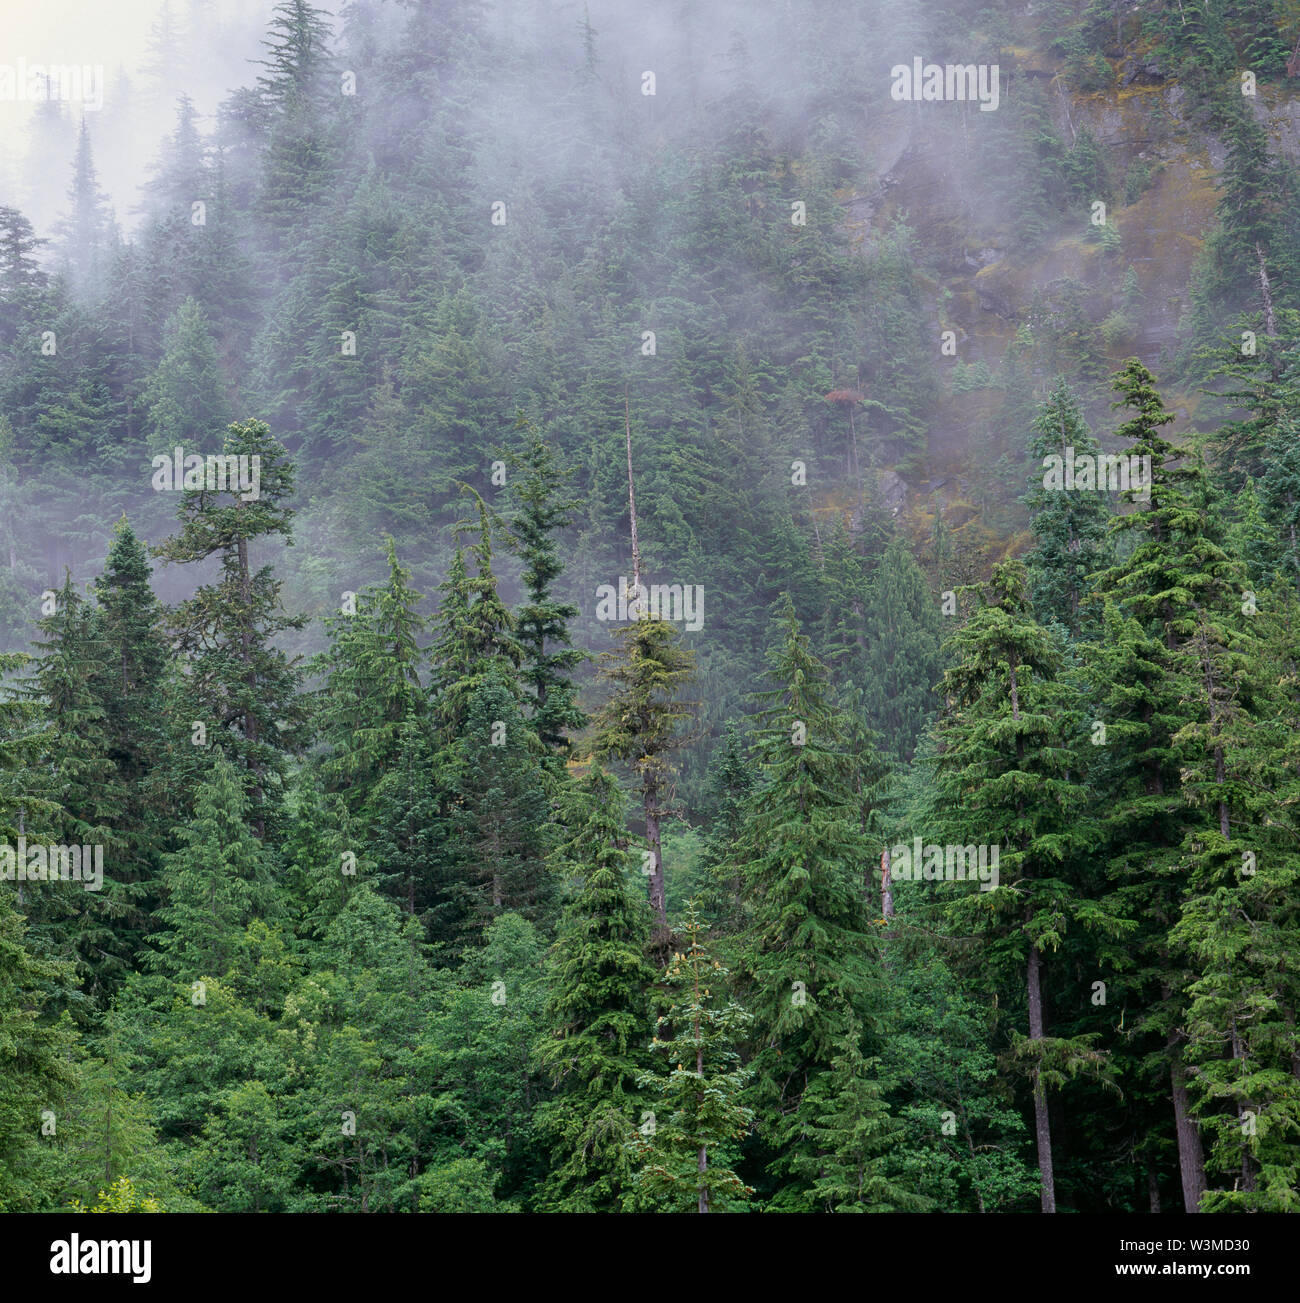 USA, Washington, Mt. Rainier National Park, Clouds swirl among evergreen trees on steep sides of Eagle Peak. Stock Photo